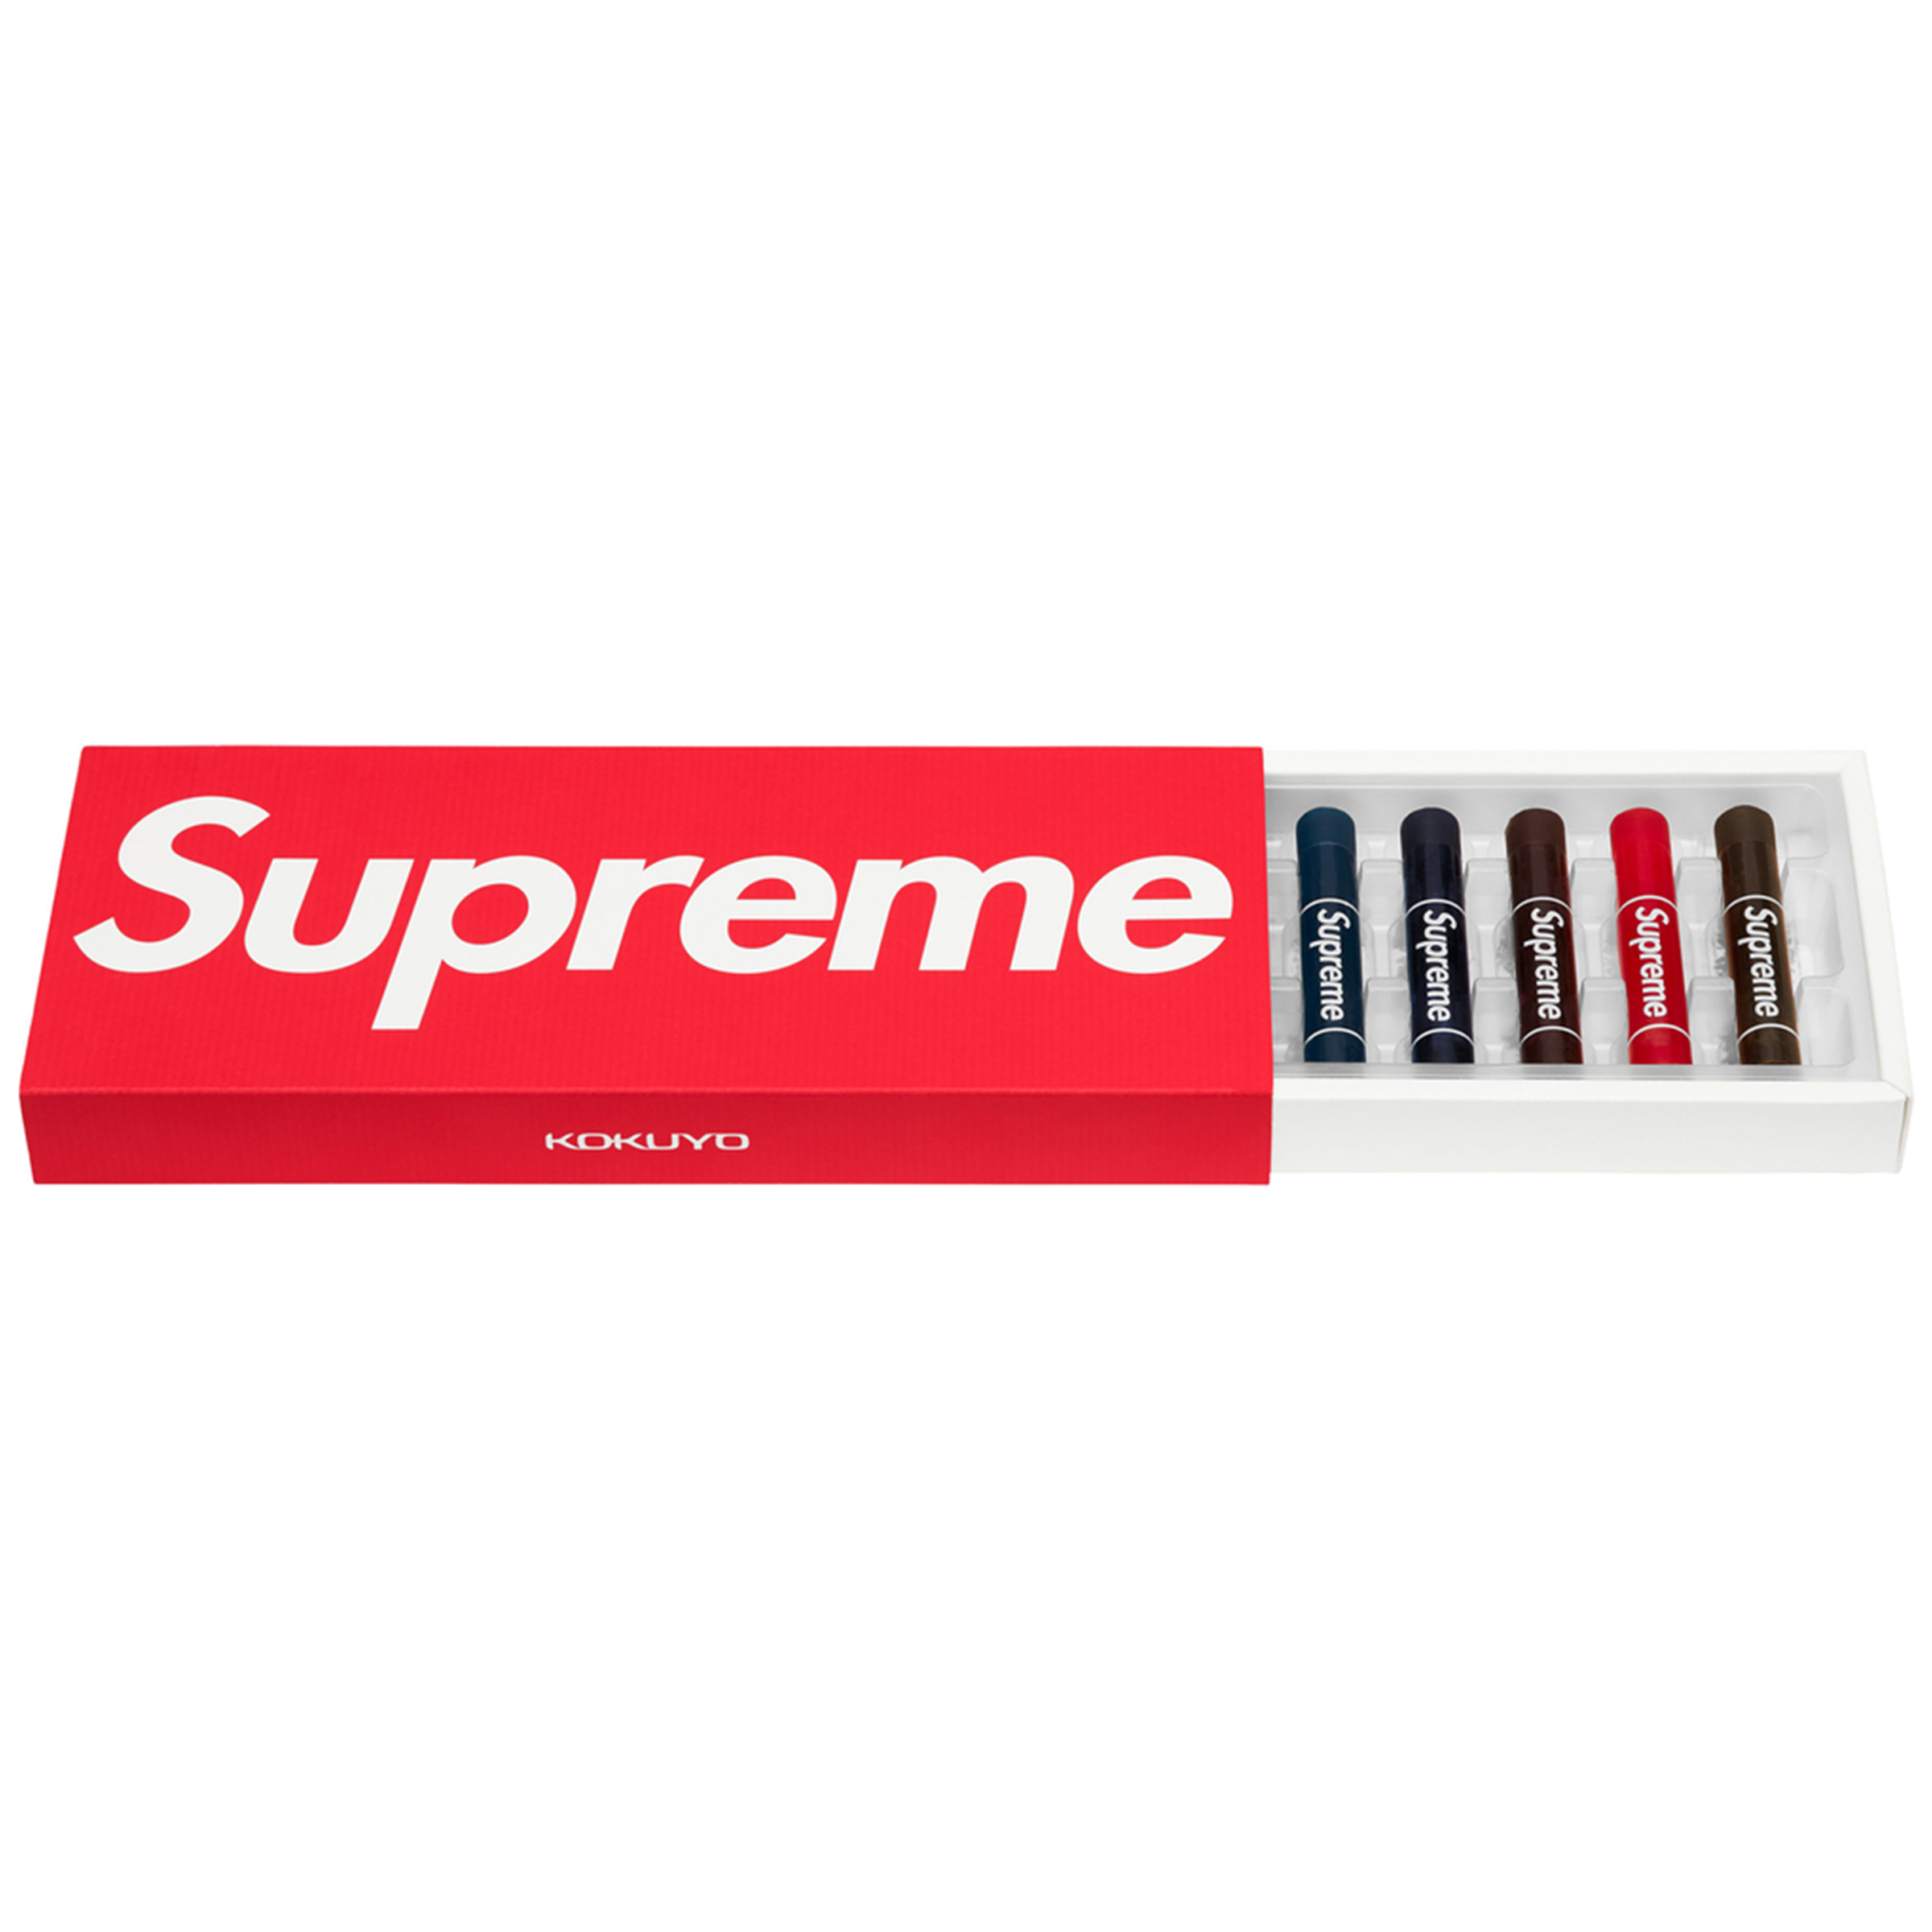 Supreme x Kokuyo Translucent Crayons